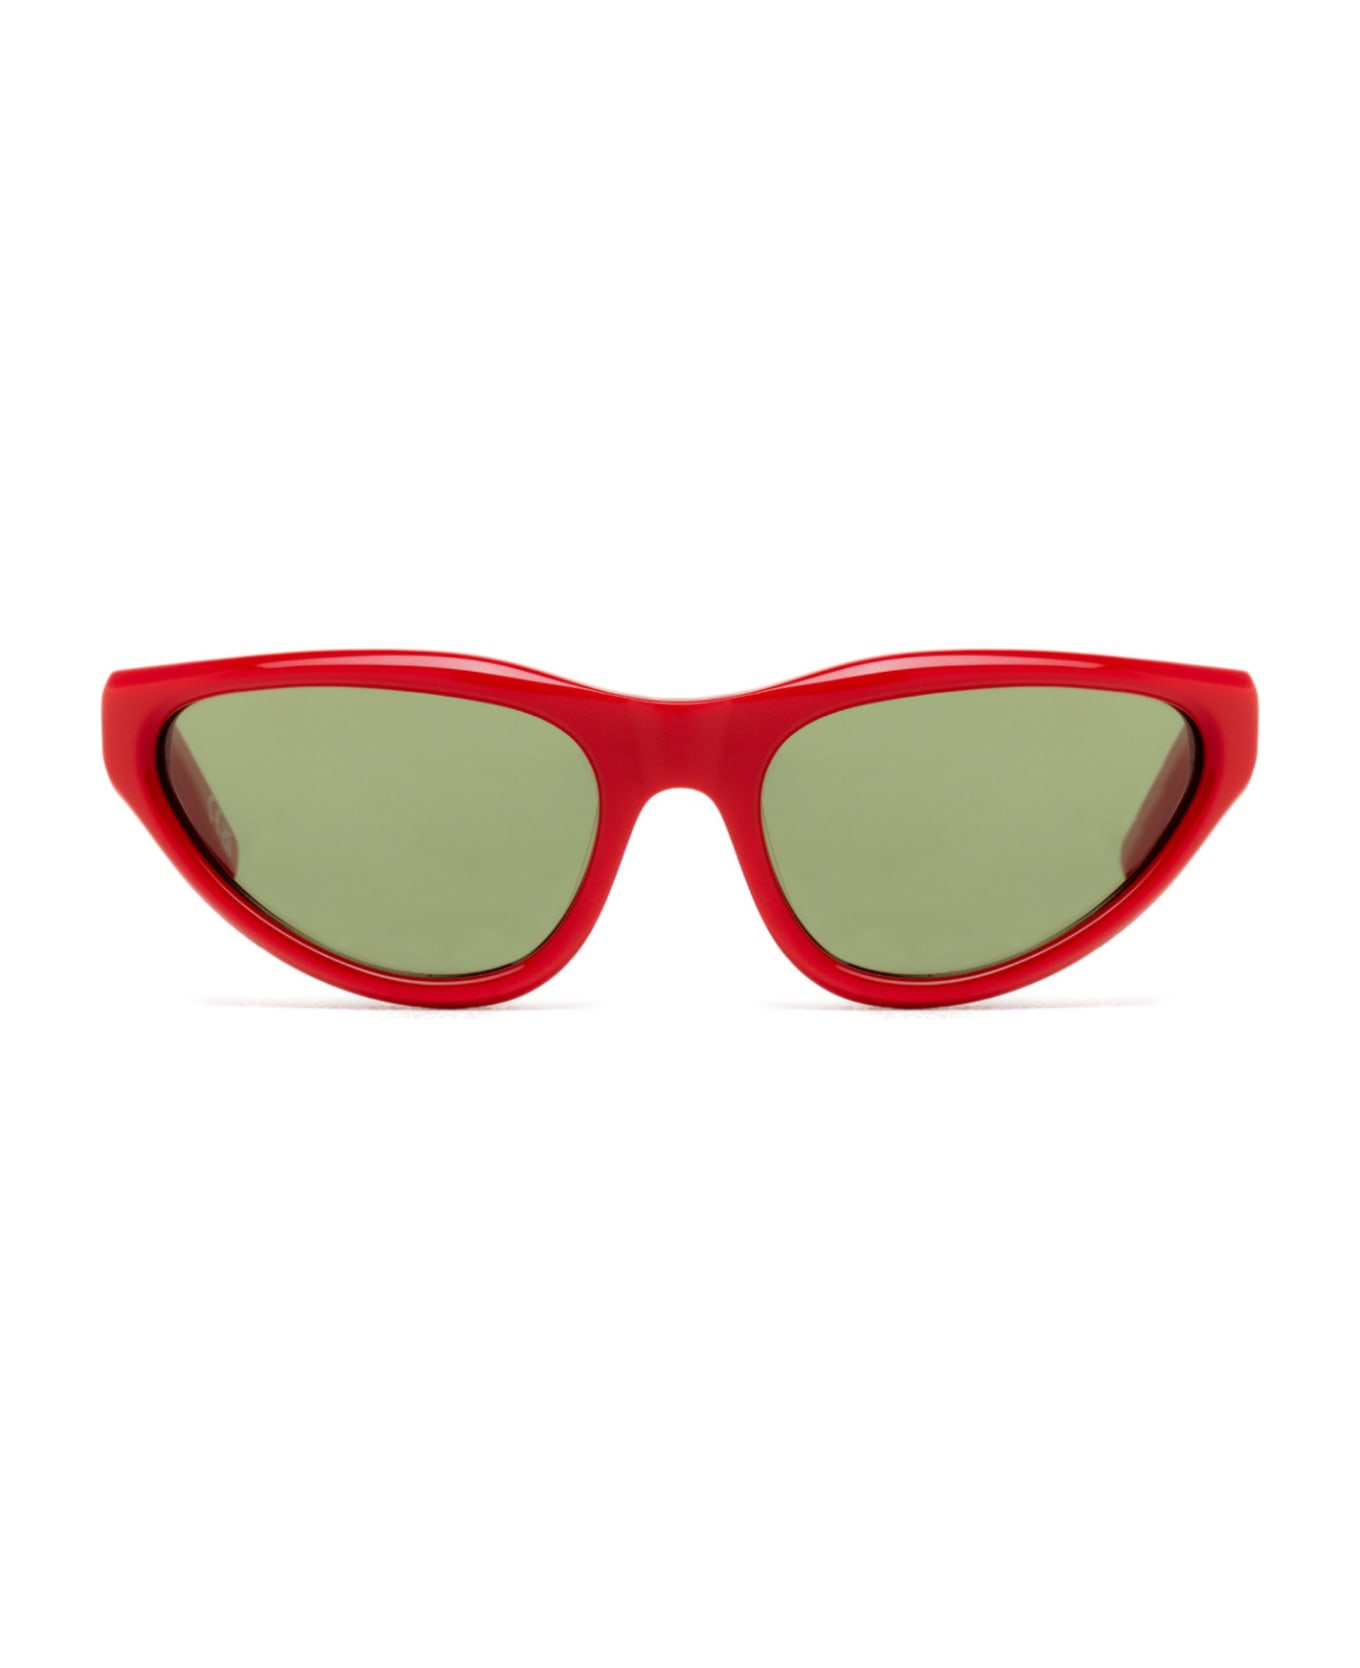 Marni Eyewear Mavericks Solid Red Sunglasses - Solid Red